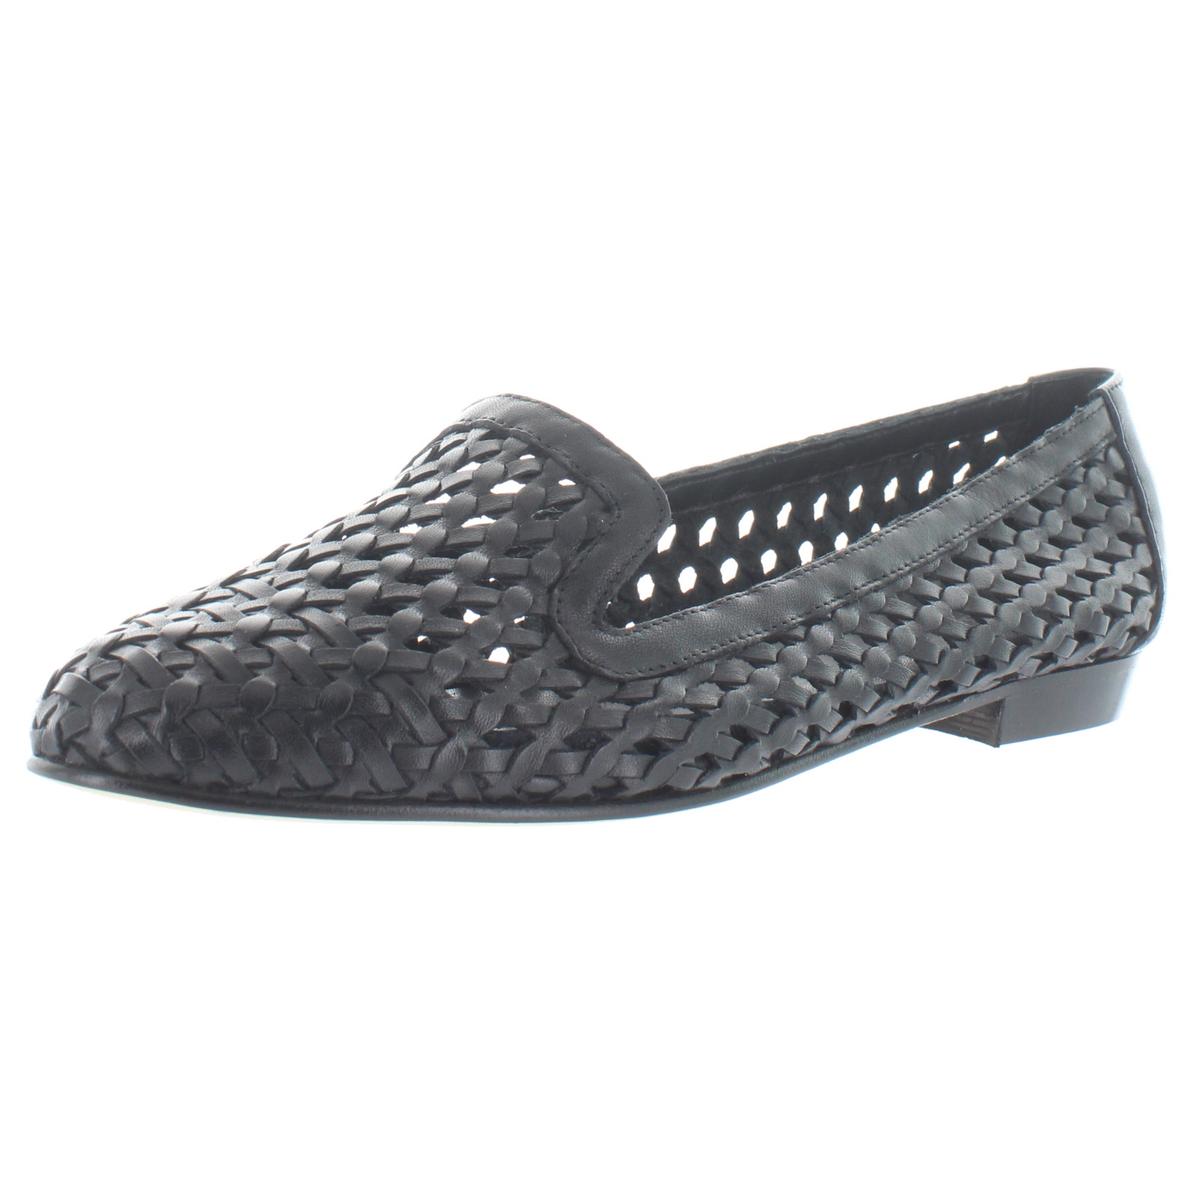 Sesto Meucci Womens Nefen Leather Woven Slip On Smoking Loafers Shoes BHFO 1463 | eBay